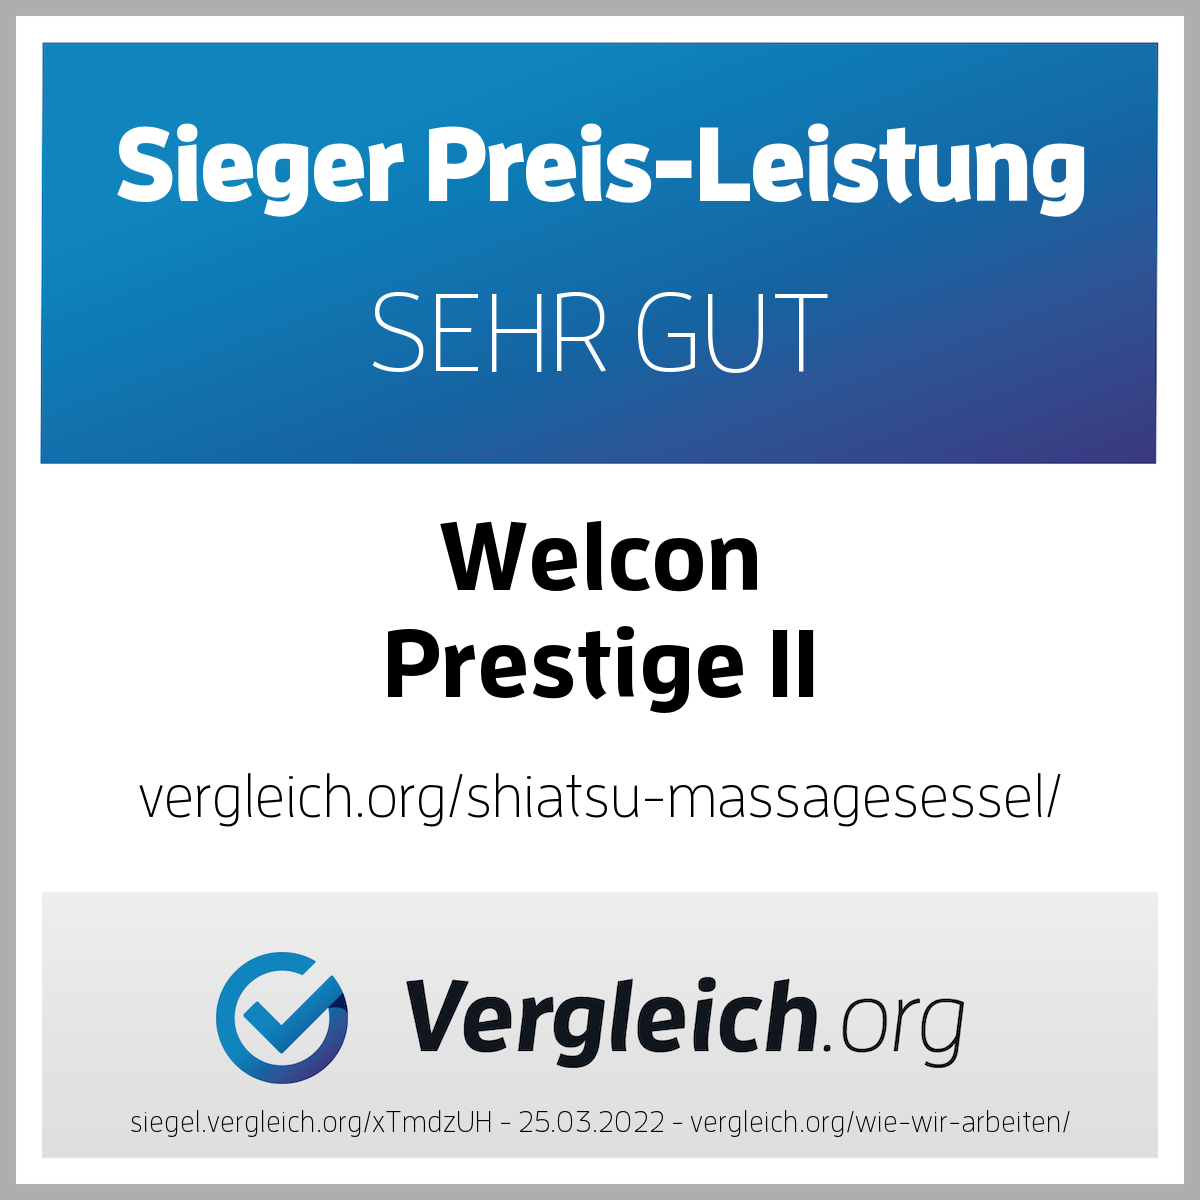 Massagesessel WELCON Prestige II in beige / braun - Sale